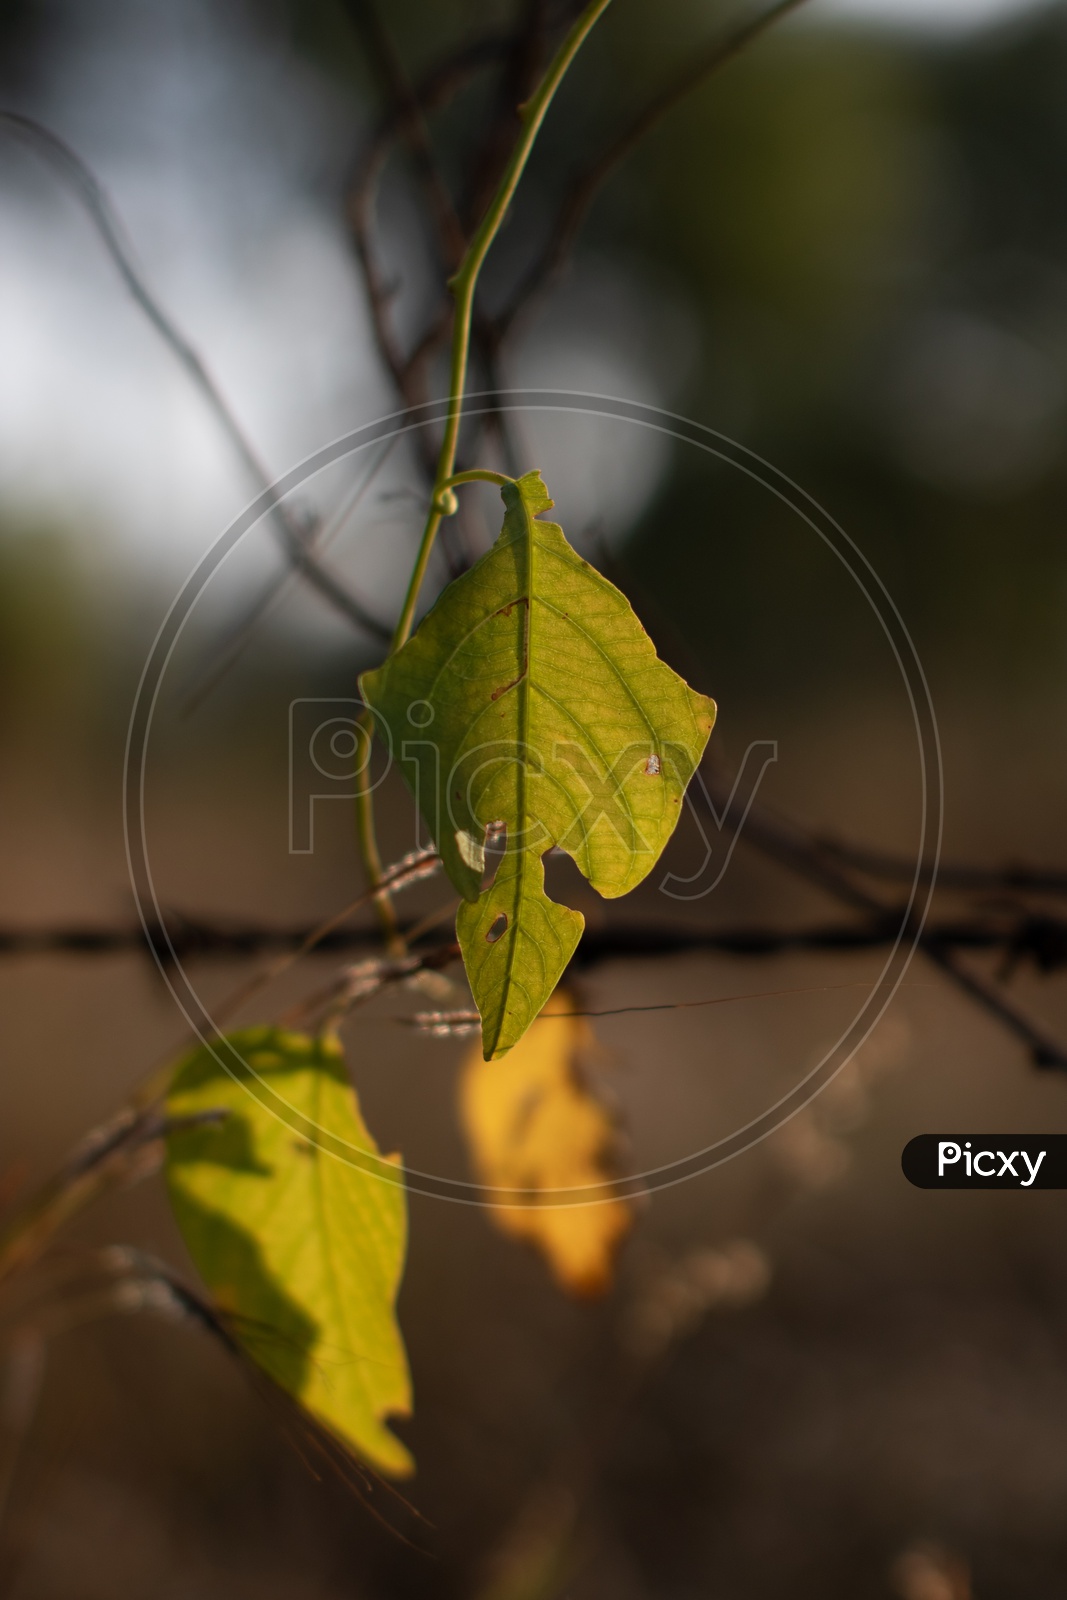 A Leaf Closeup Shot Forming a Background